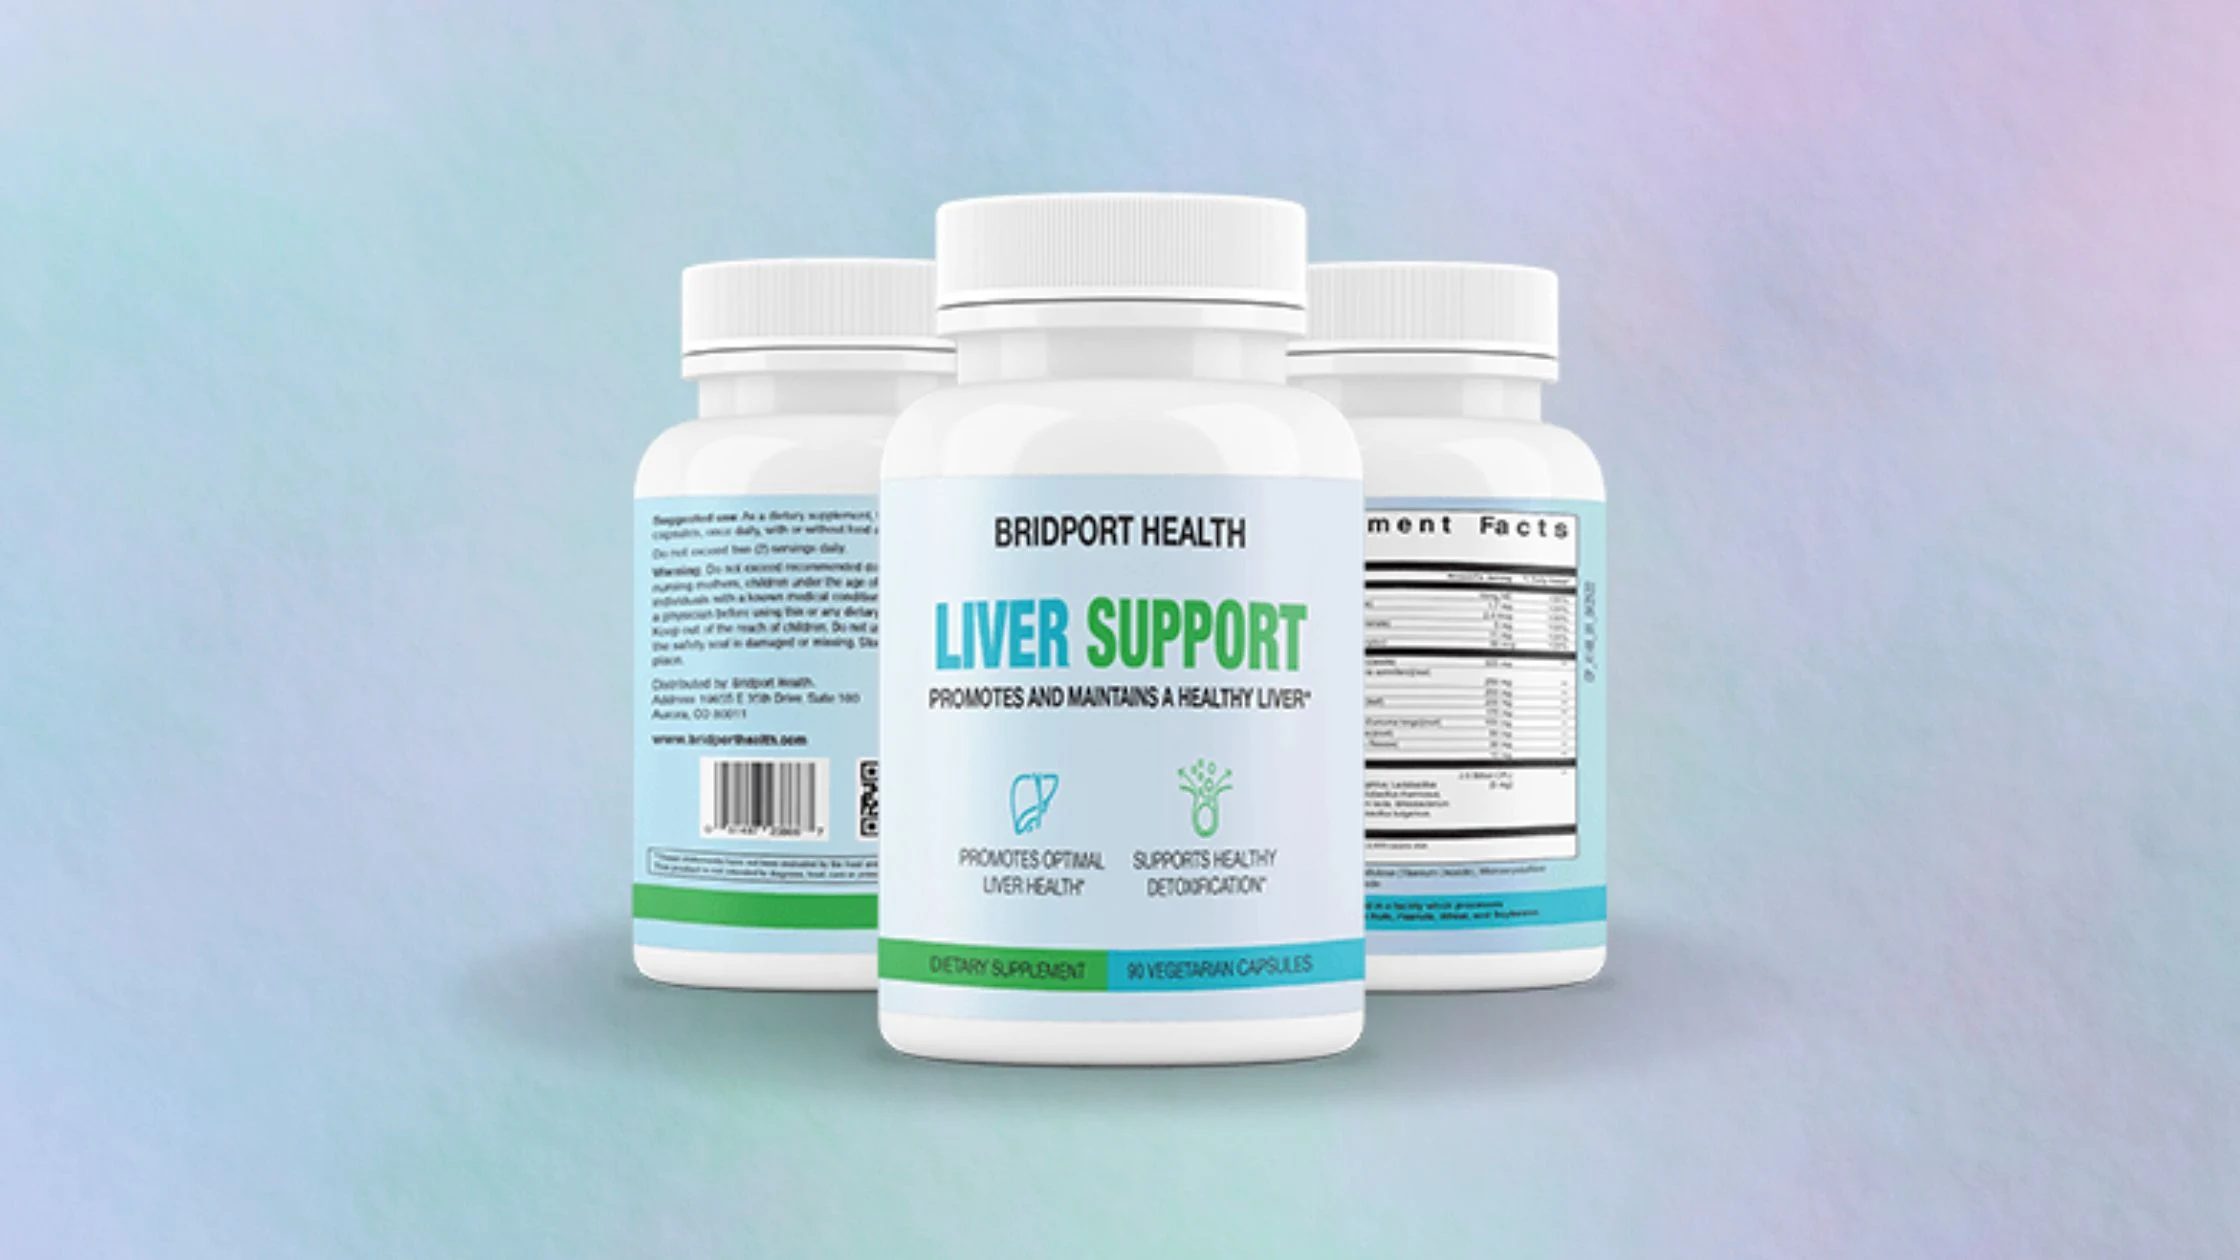 Bridport Health Liver Support Reviews